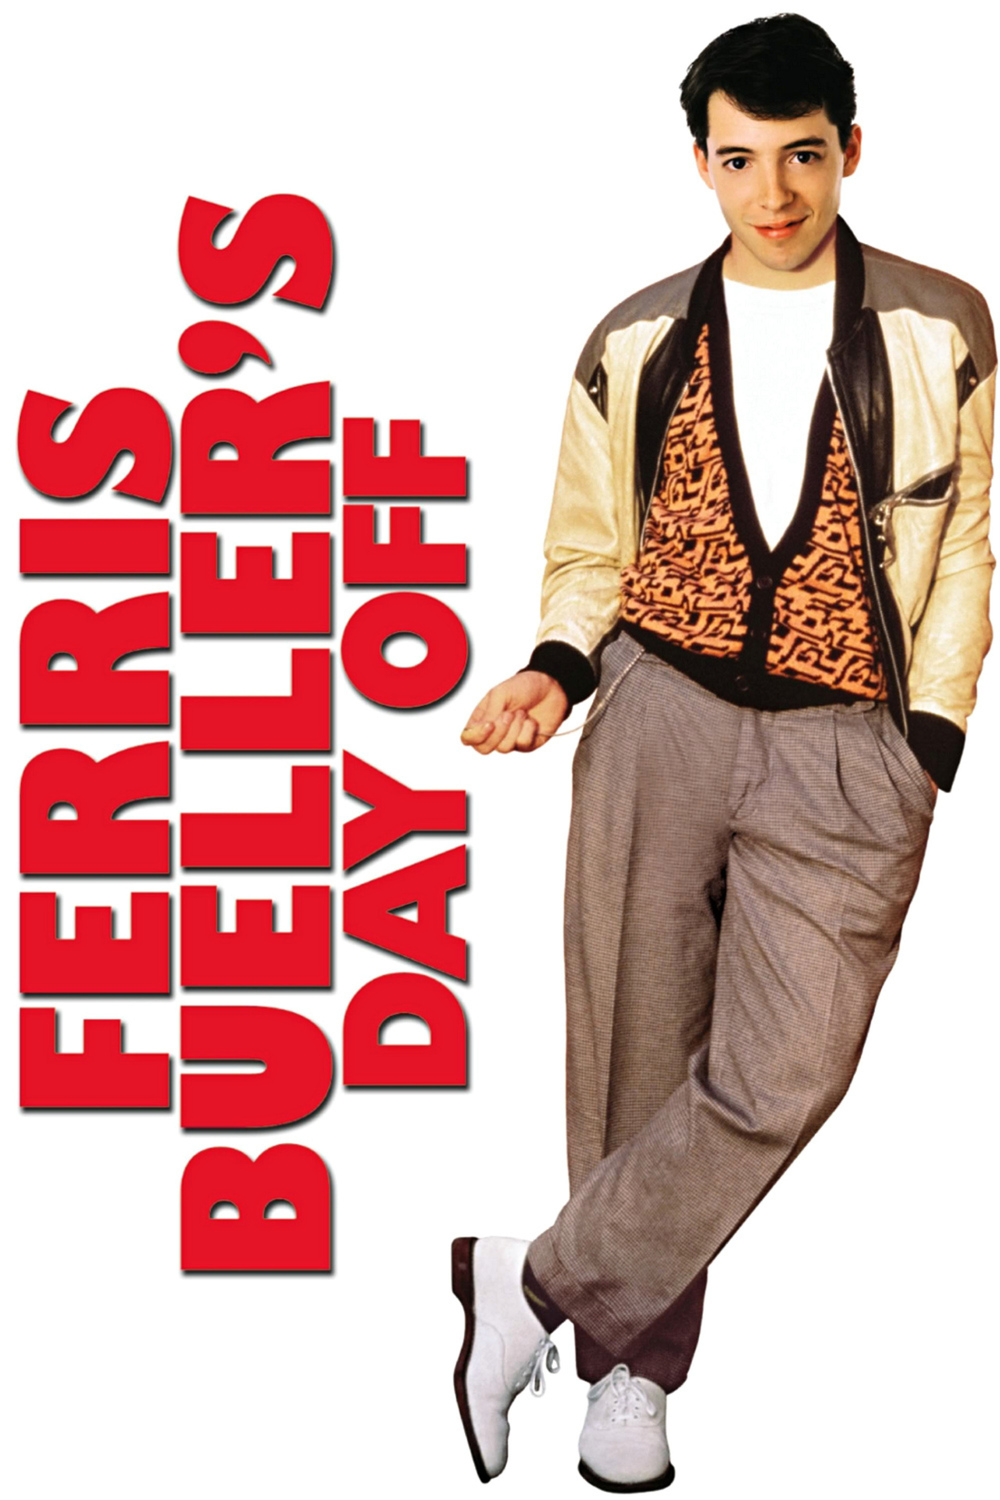 Volný den Ferrise Buellera | Fandíme filmu